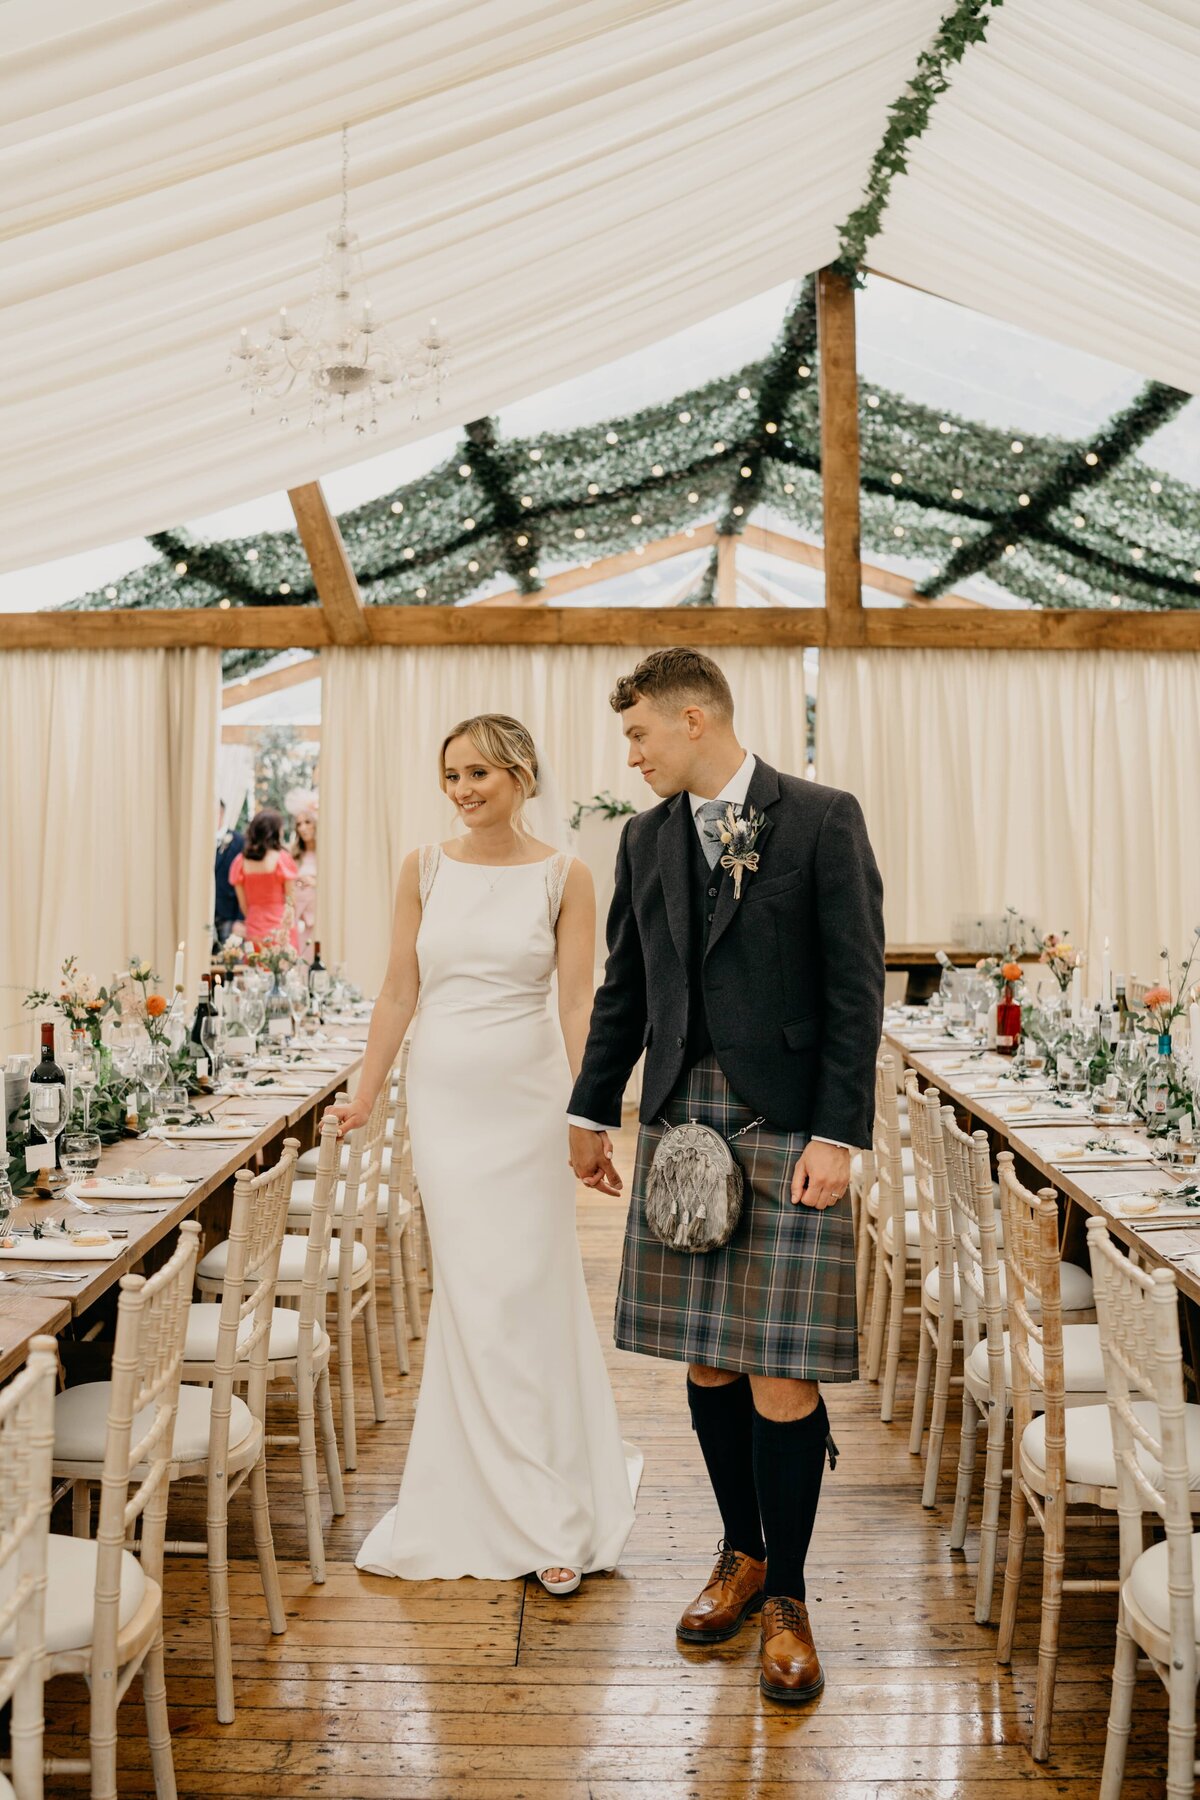 House of Elrick Wedding photography by Aberdeenshire wedding photographer Scott Arlow5